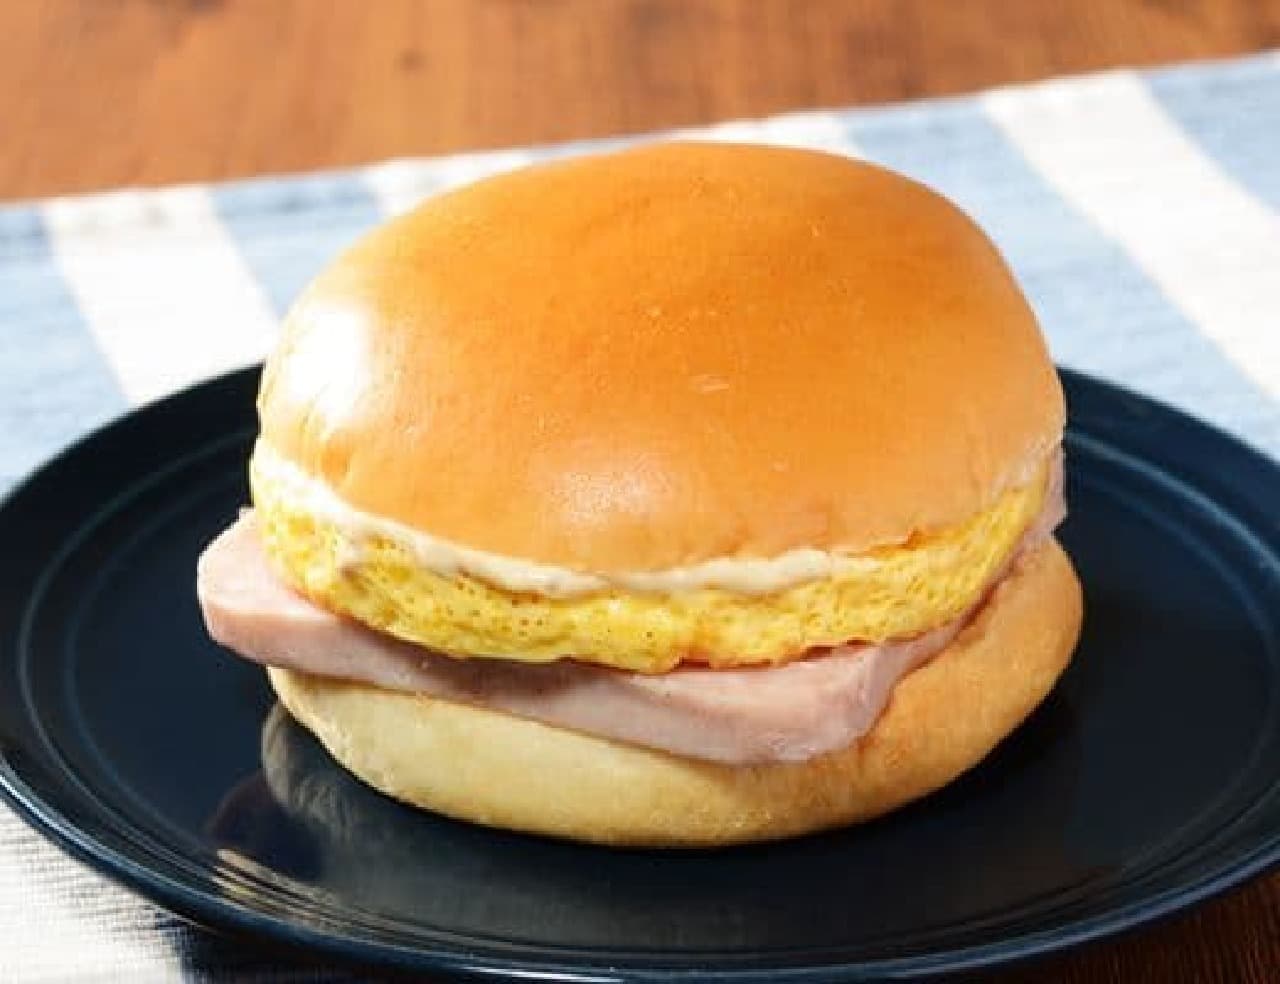 Lawson "Pork and Egg Burger